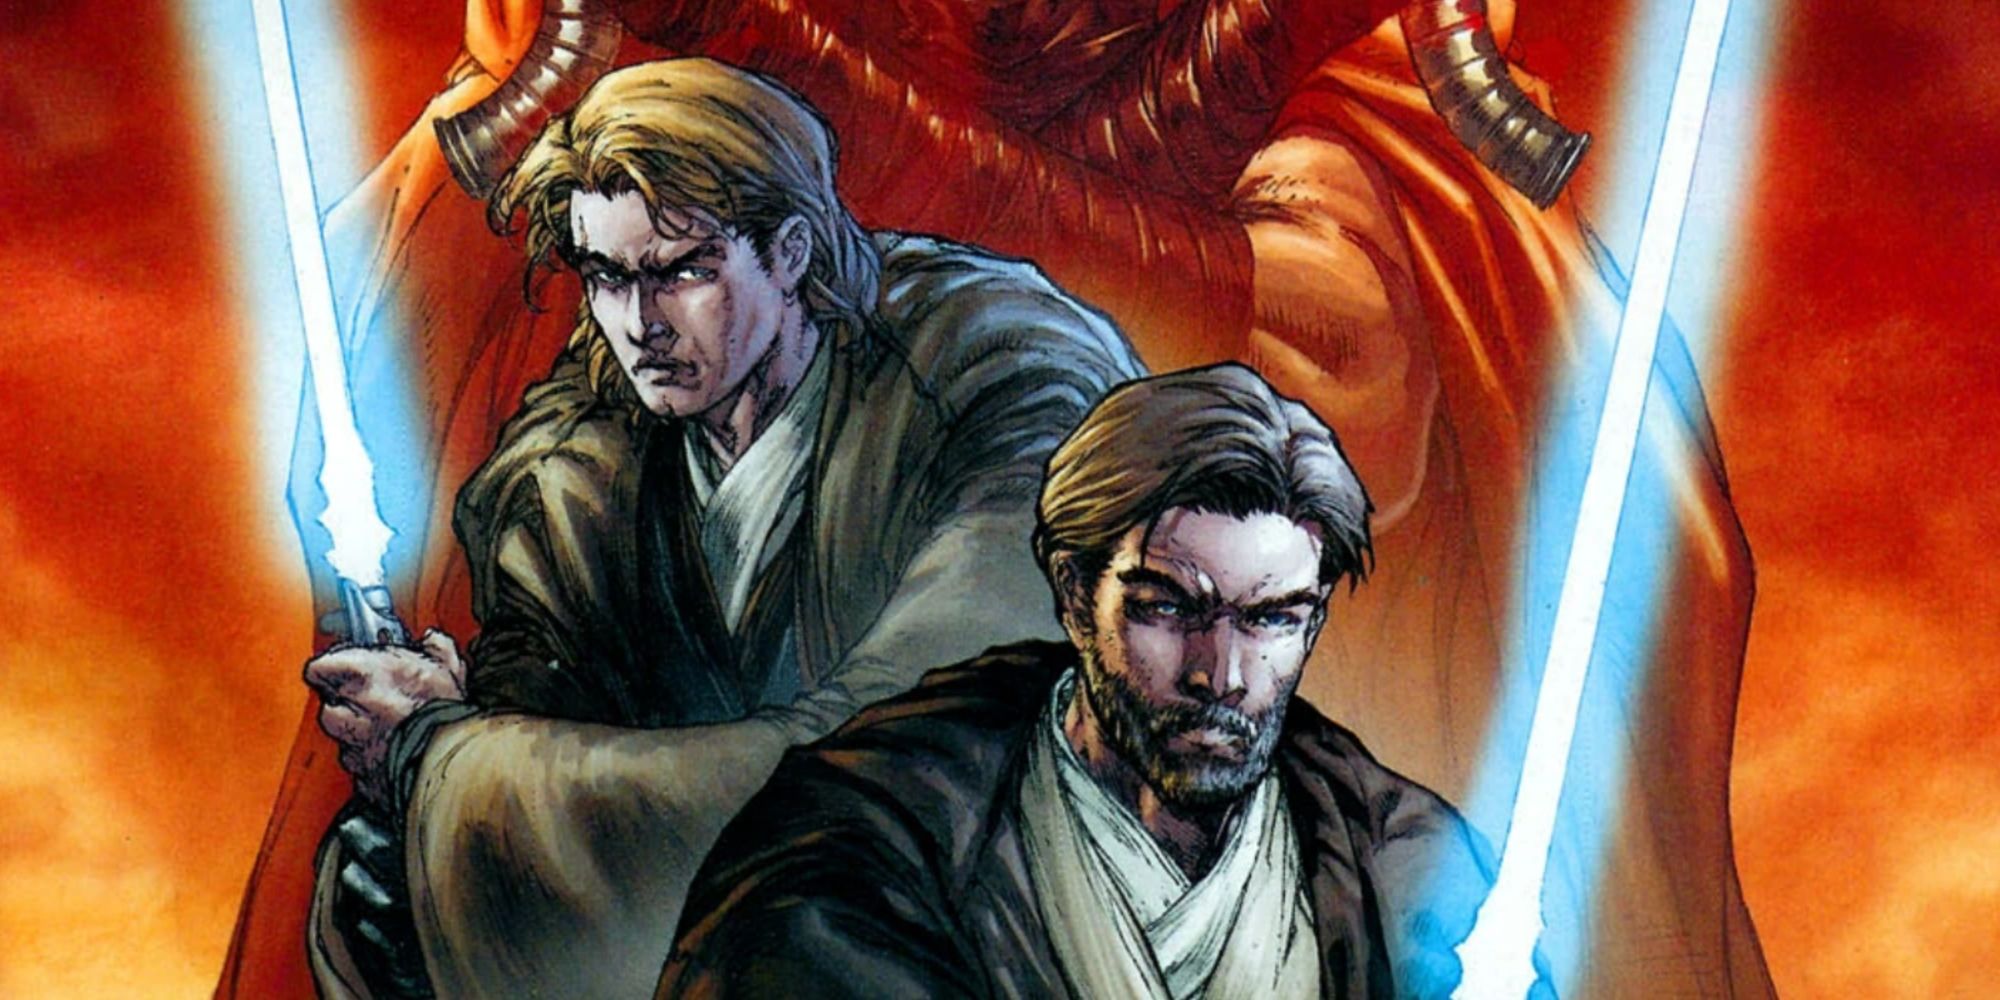 Anakin and Obi-Wan ignite their lightsabers in Star Wars comics.